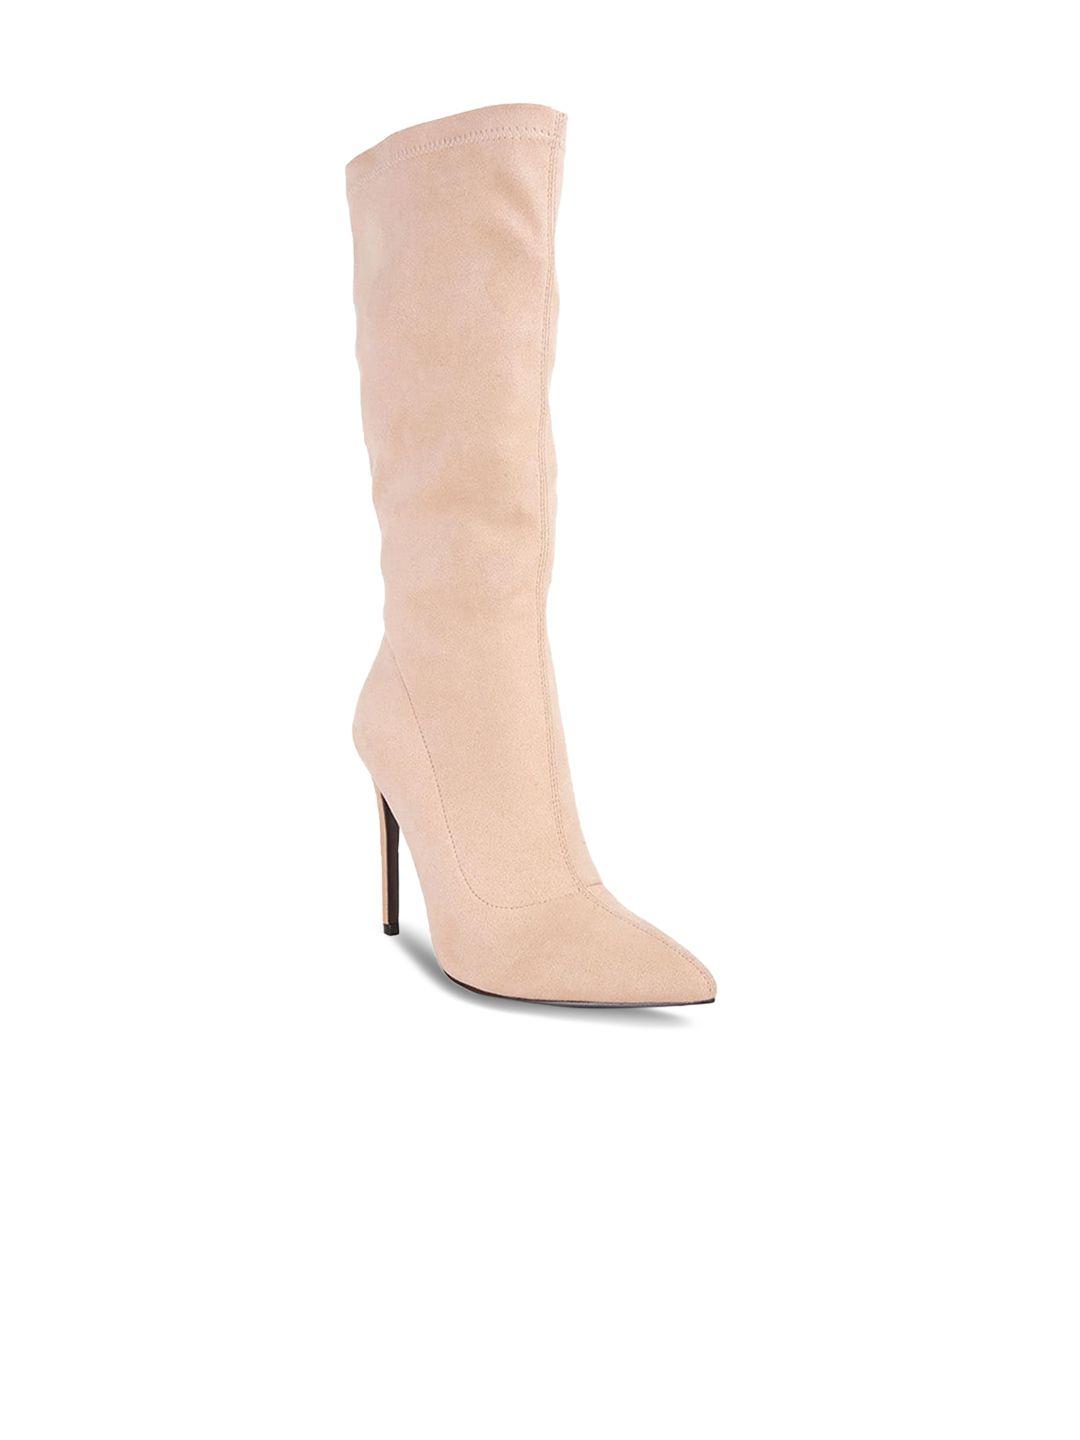 london rag women calf length stiletto boots